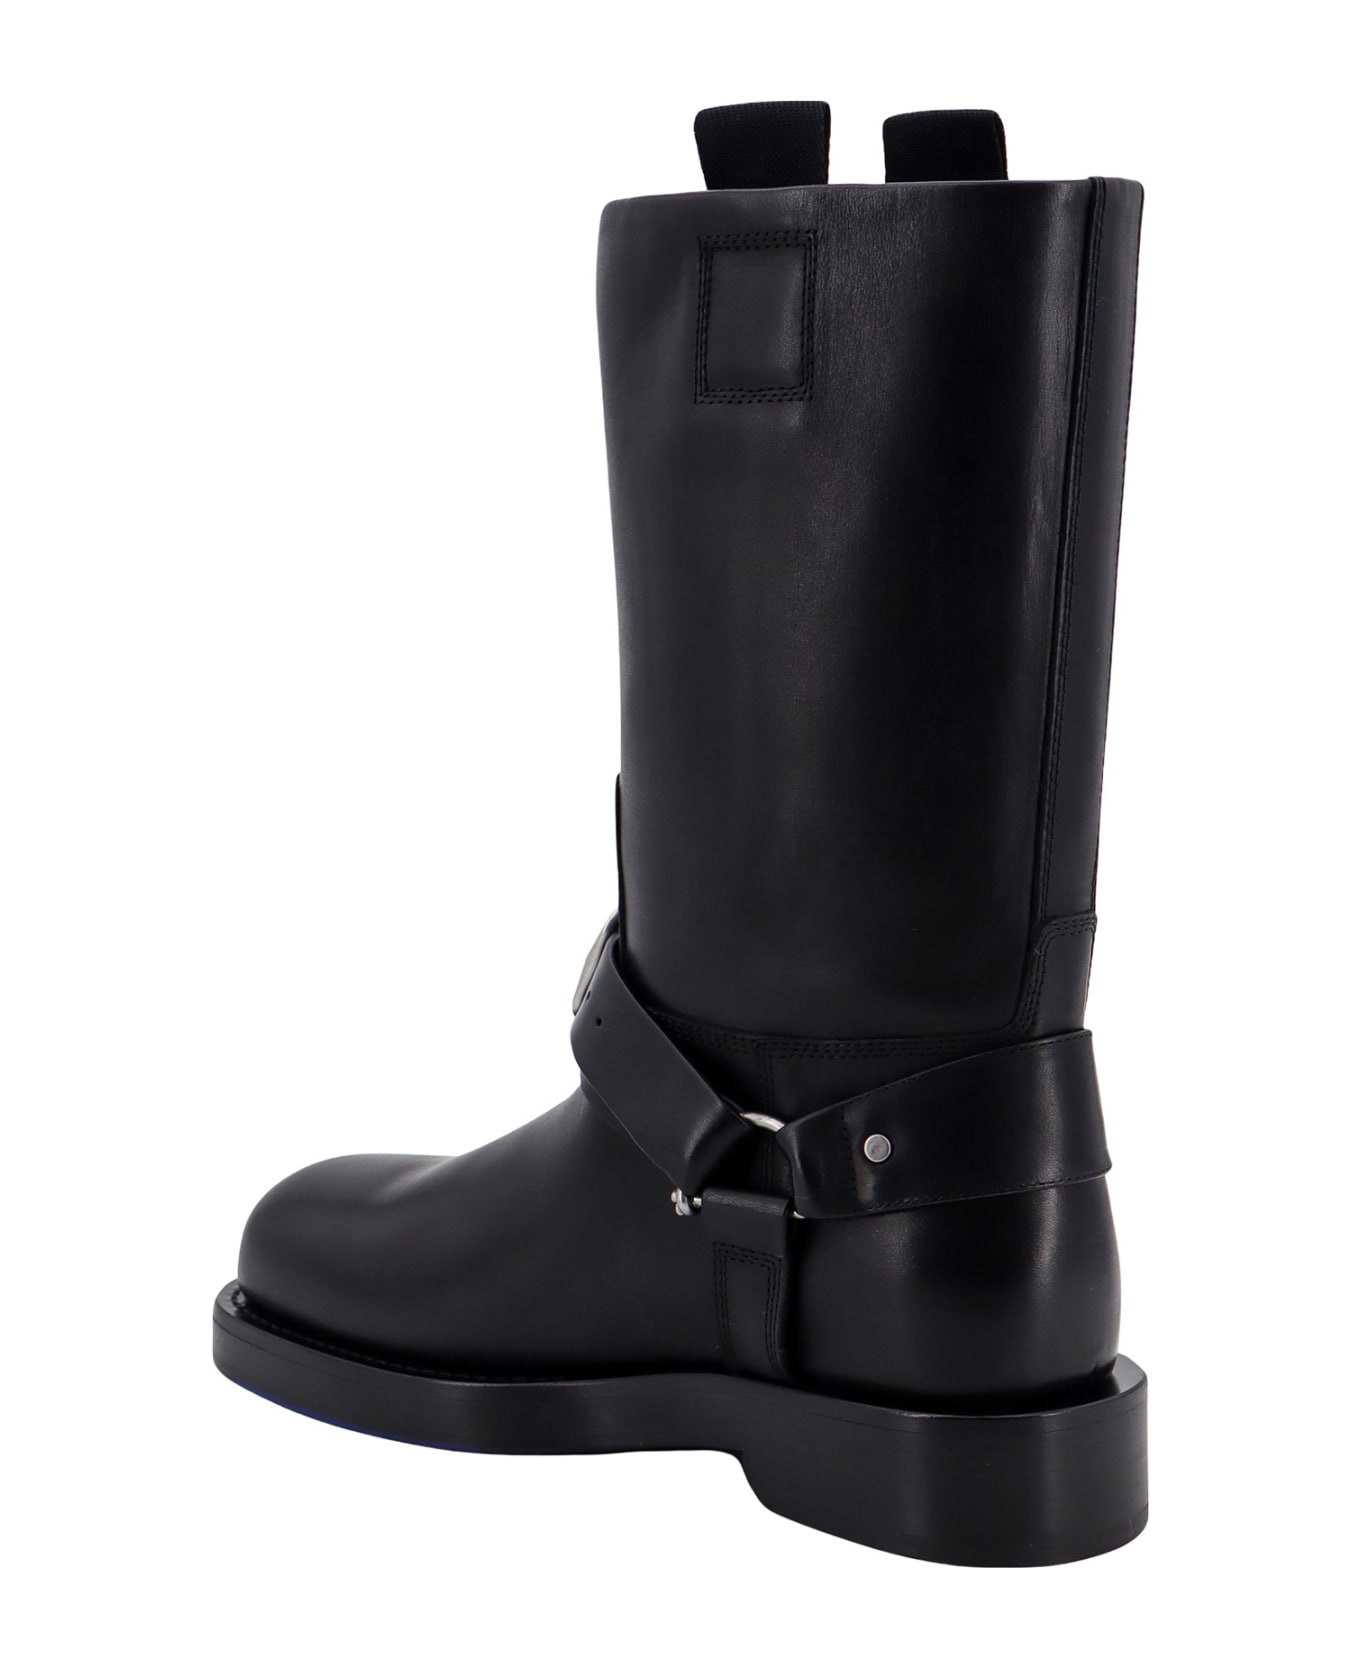 Burberry Saddle Low Boots - Black ブーツ